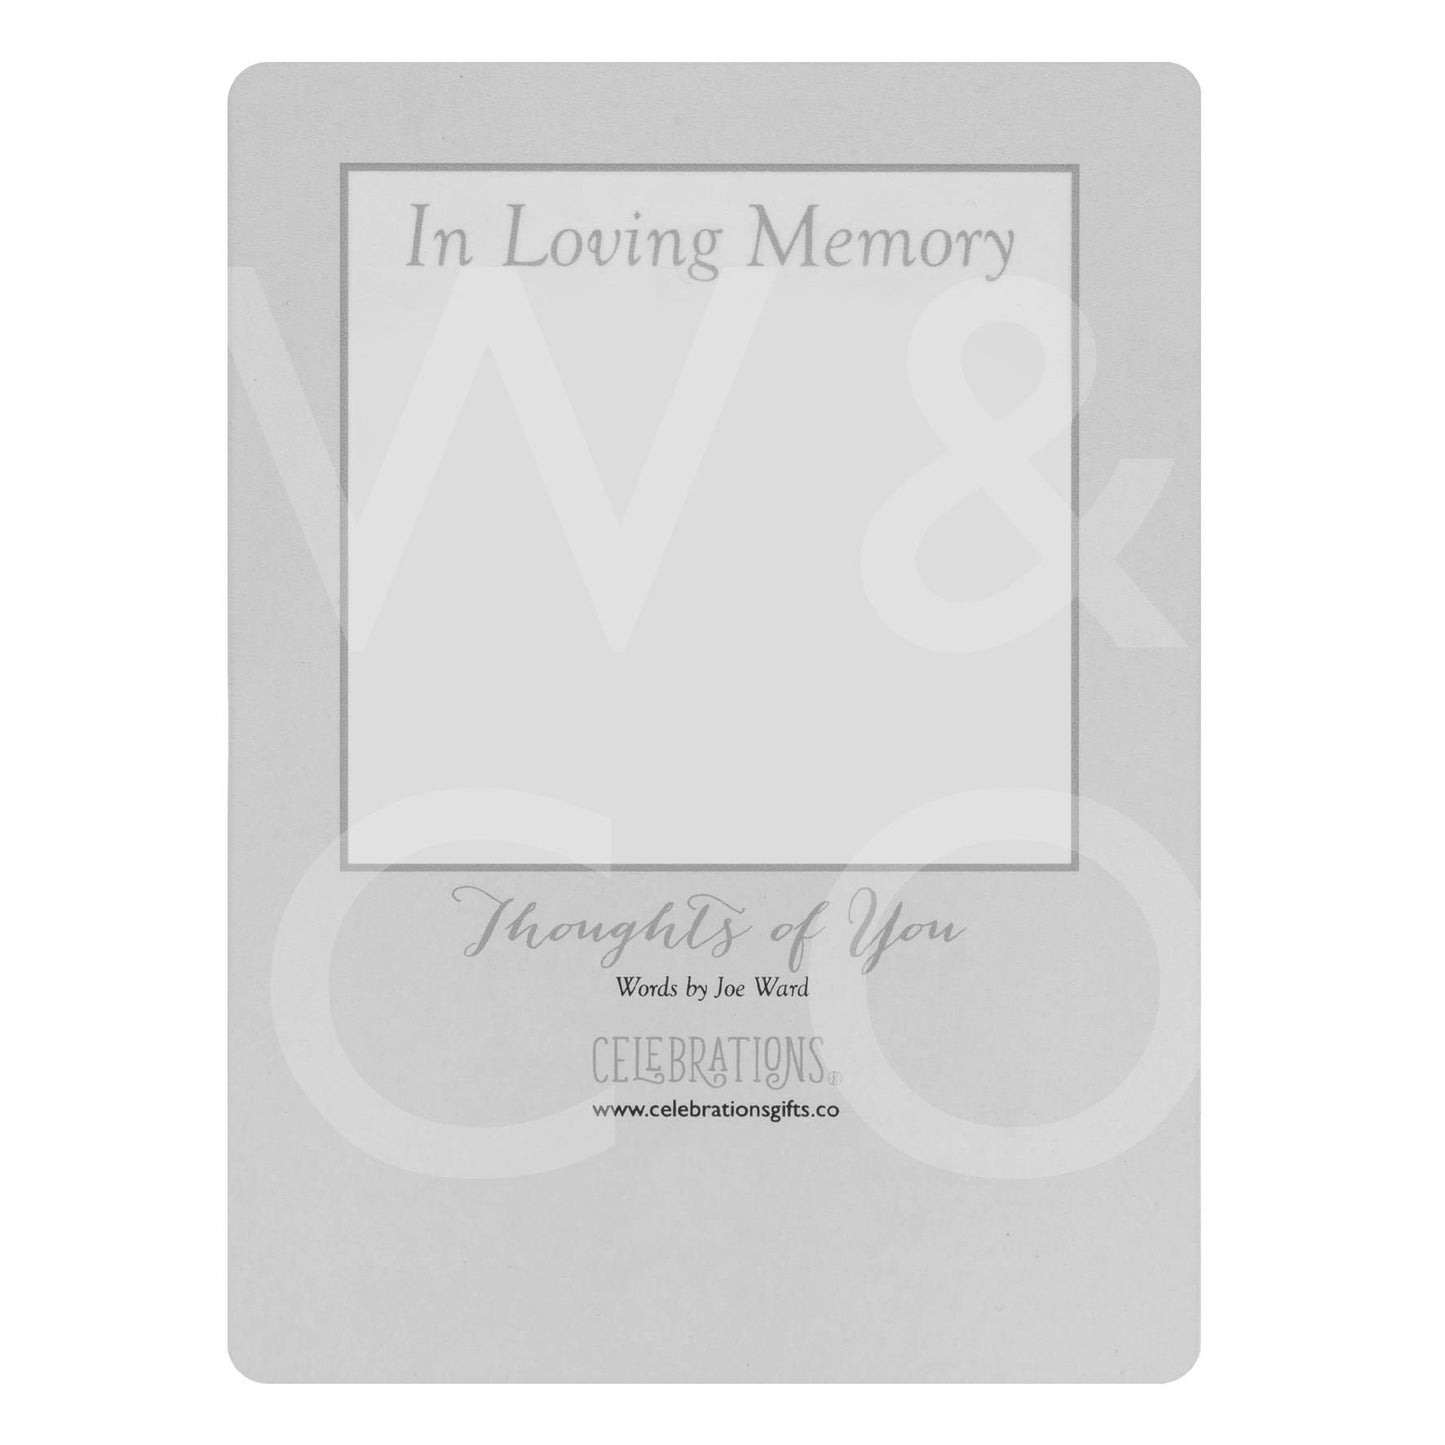 Graveside Memorial Cards - For My Grandad